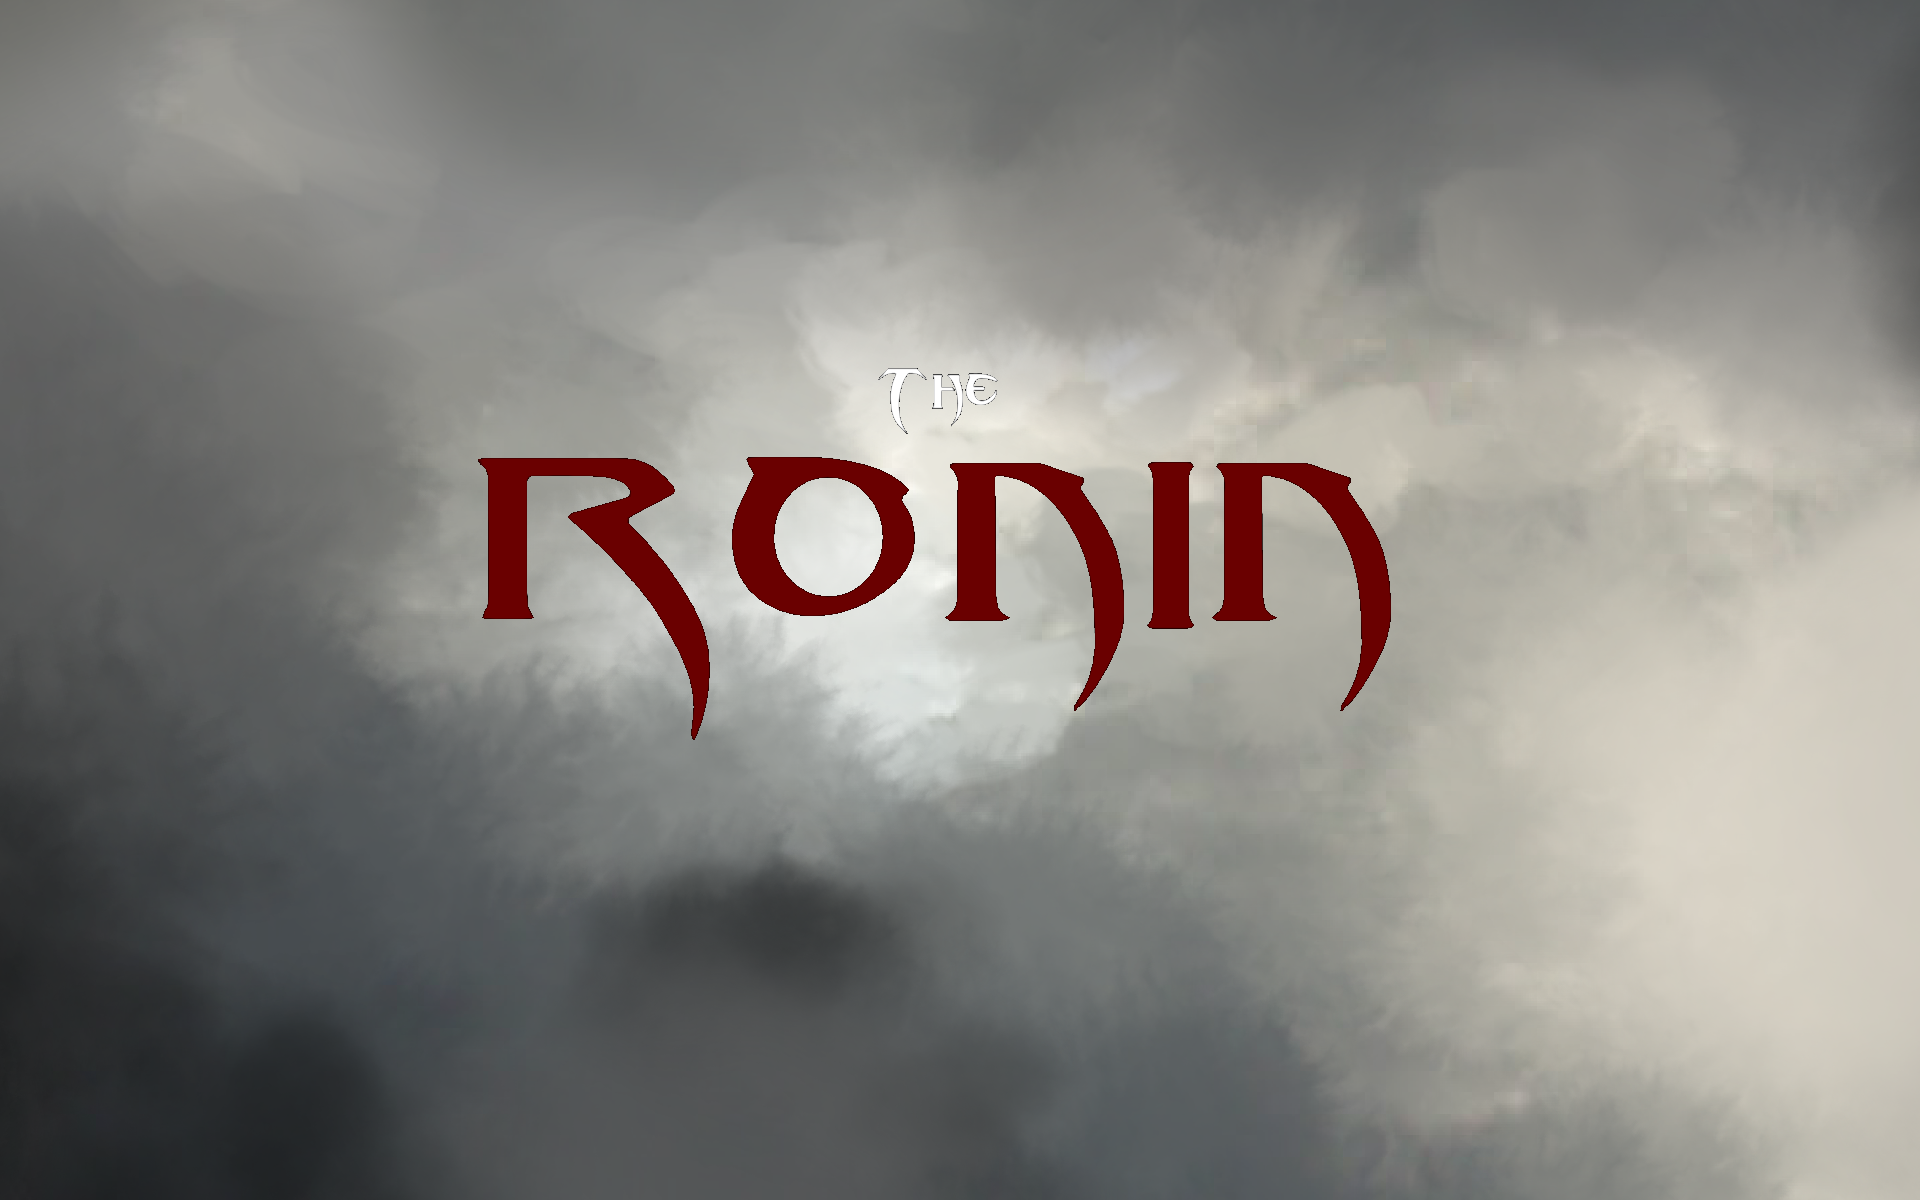 The Ronin